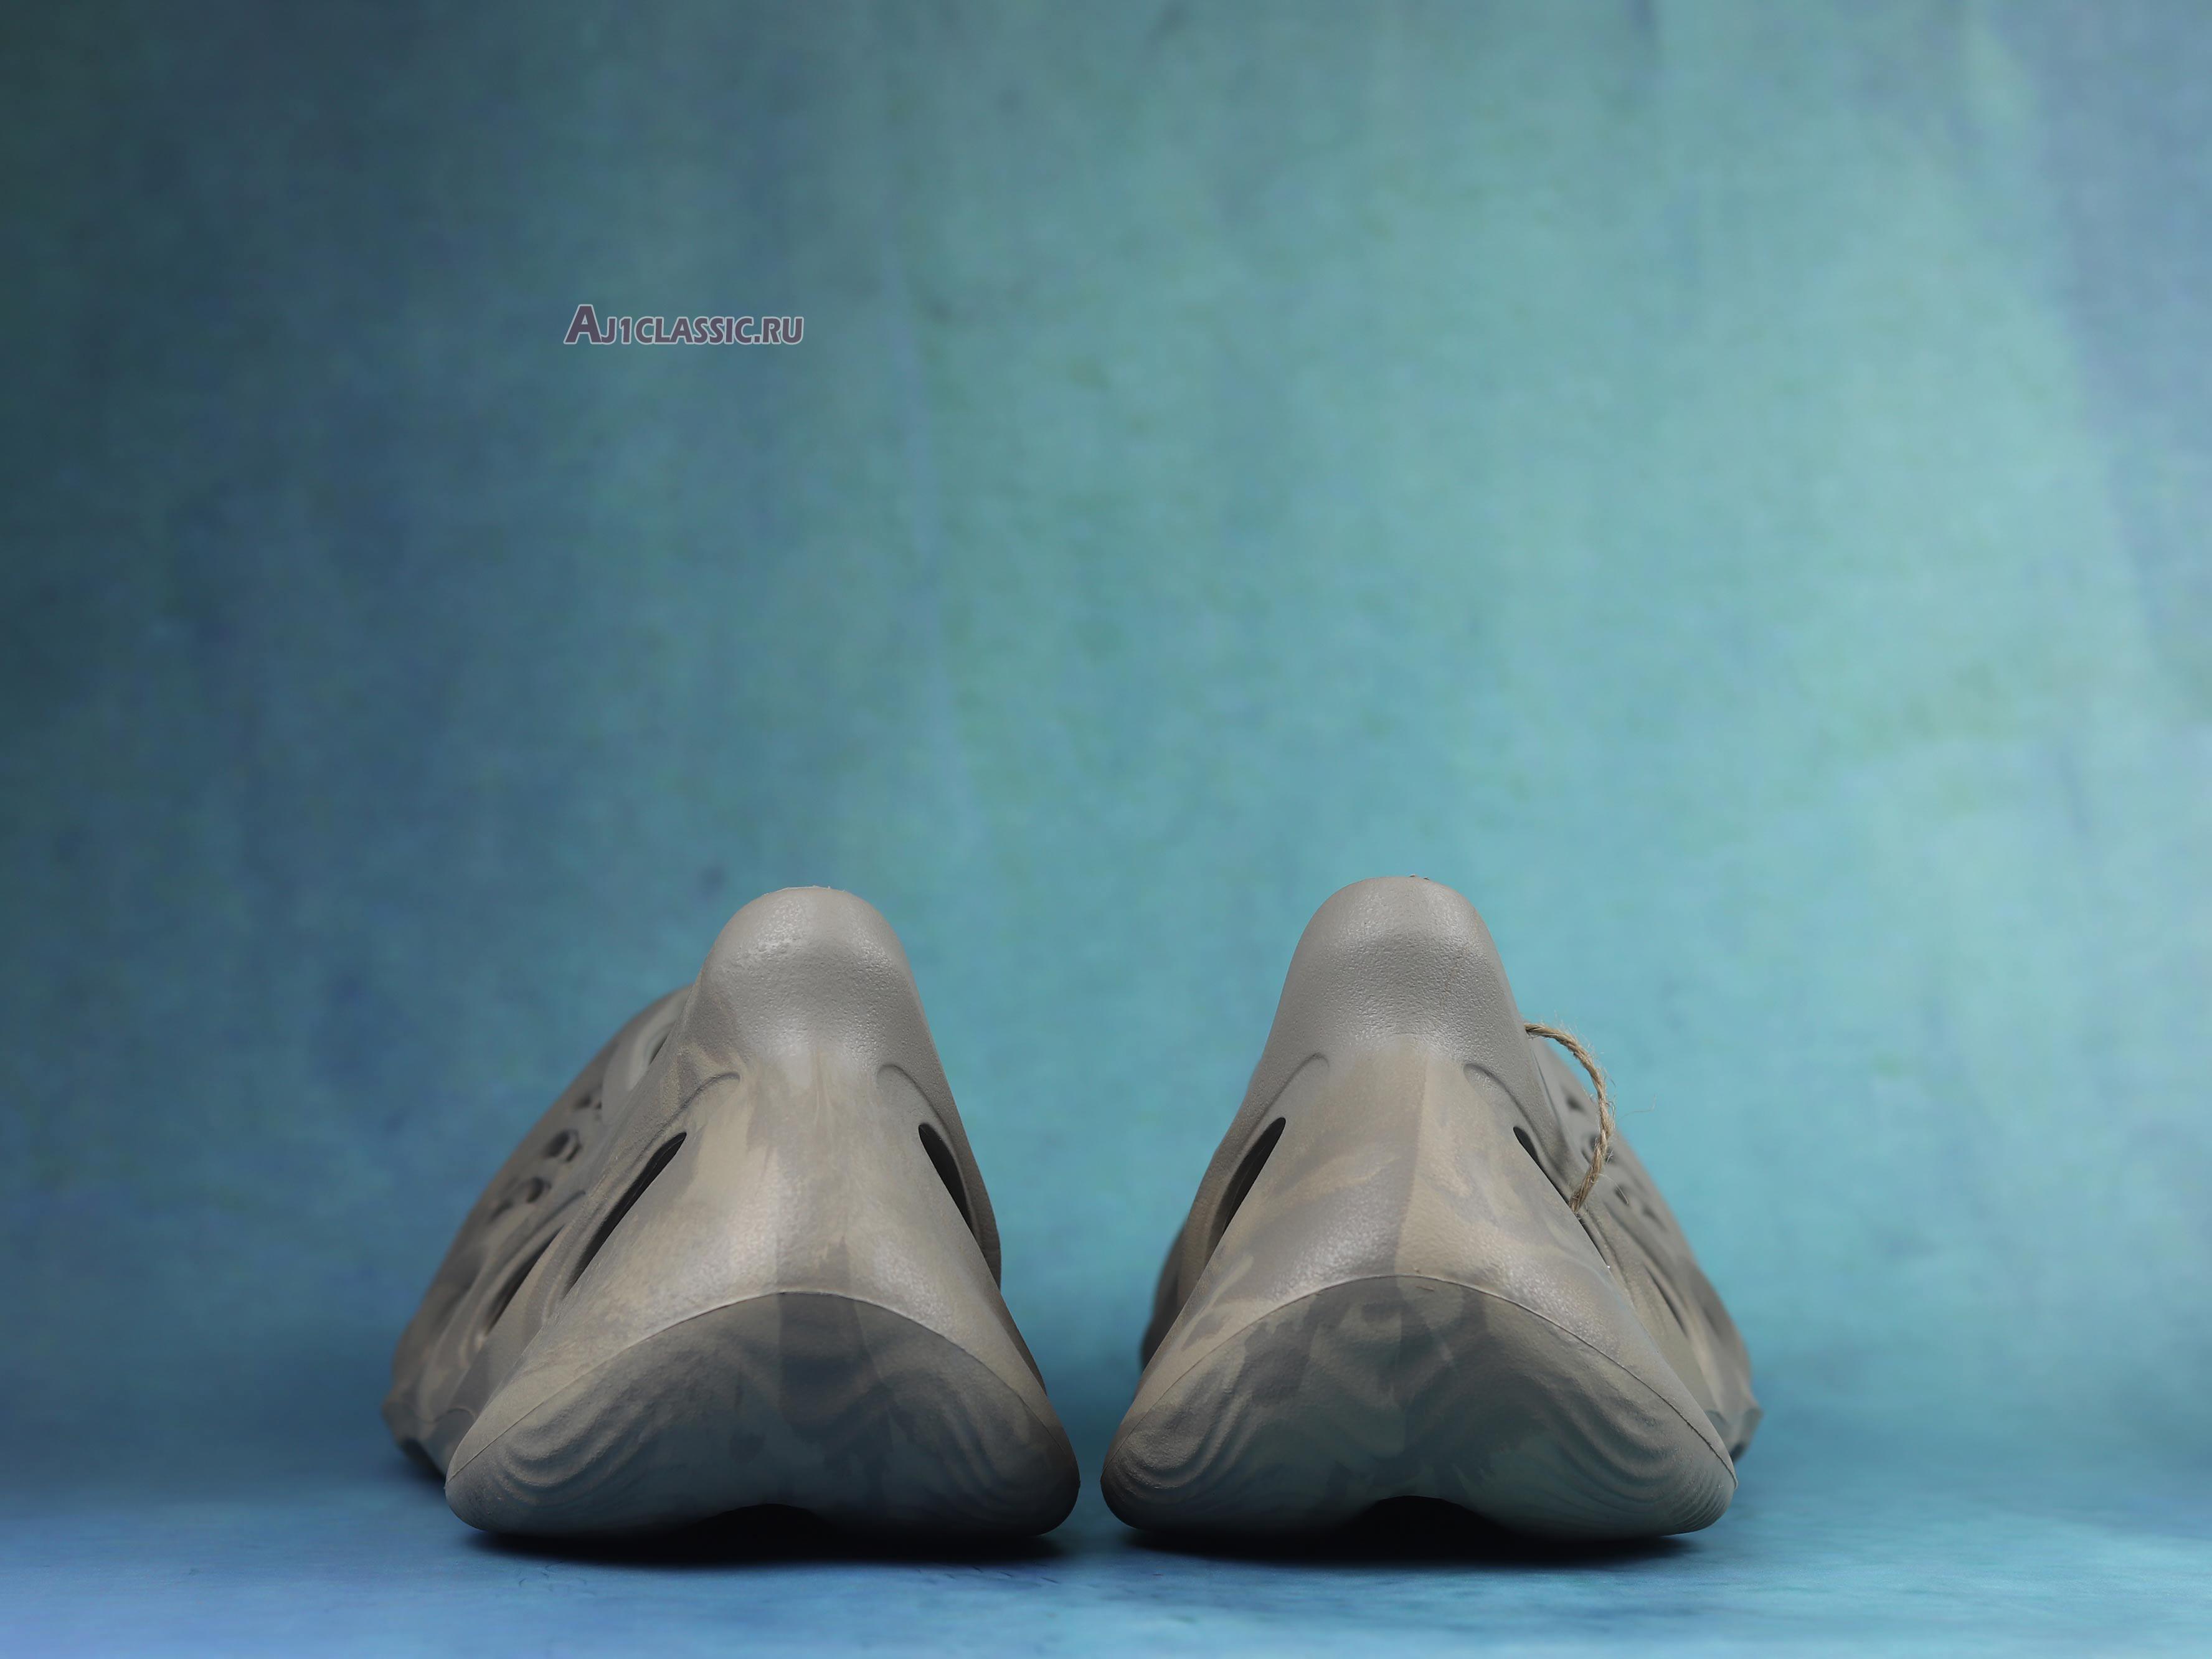 Adidas Yeezy Foam Runner "Stone Sage" GX4472